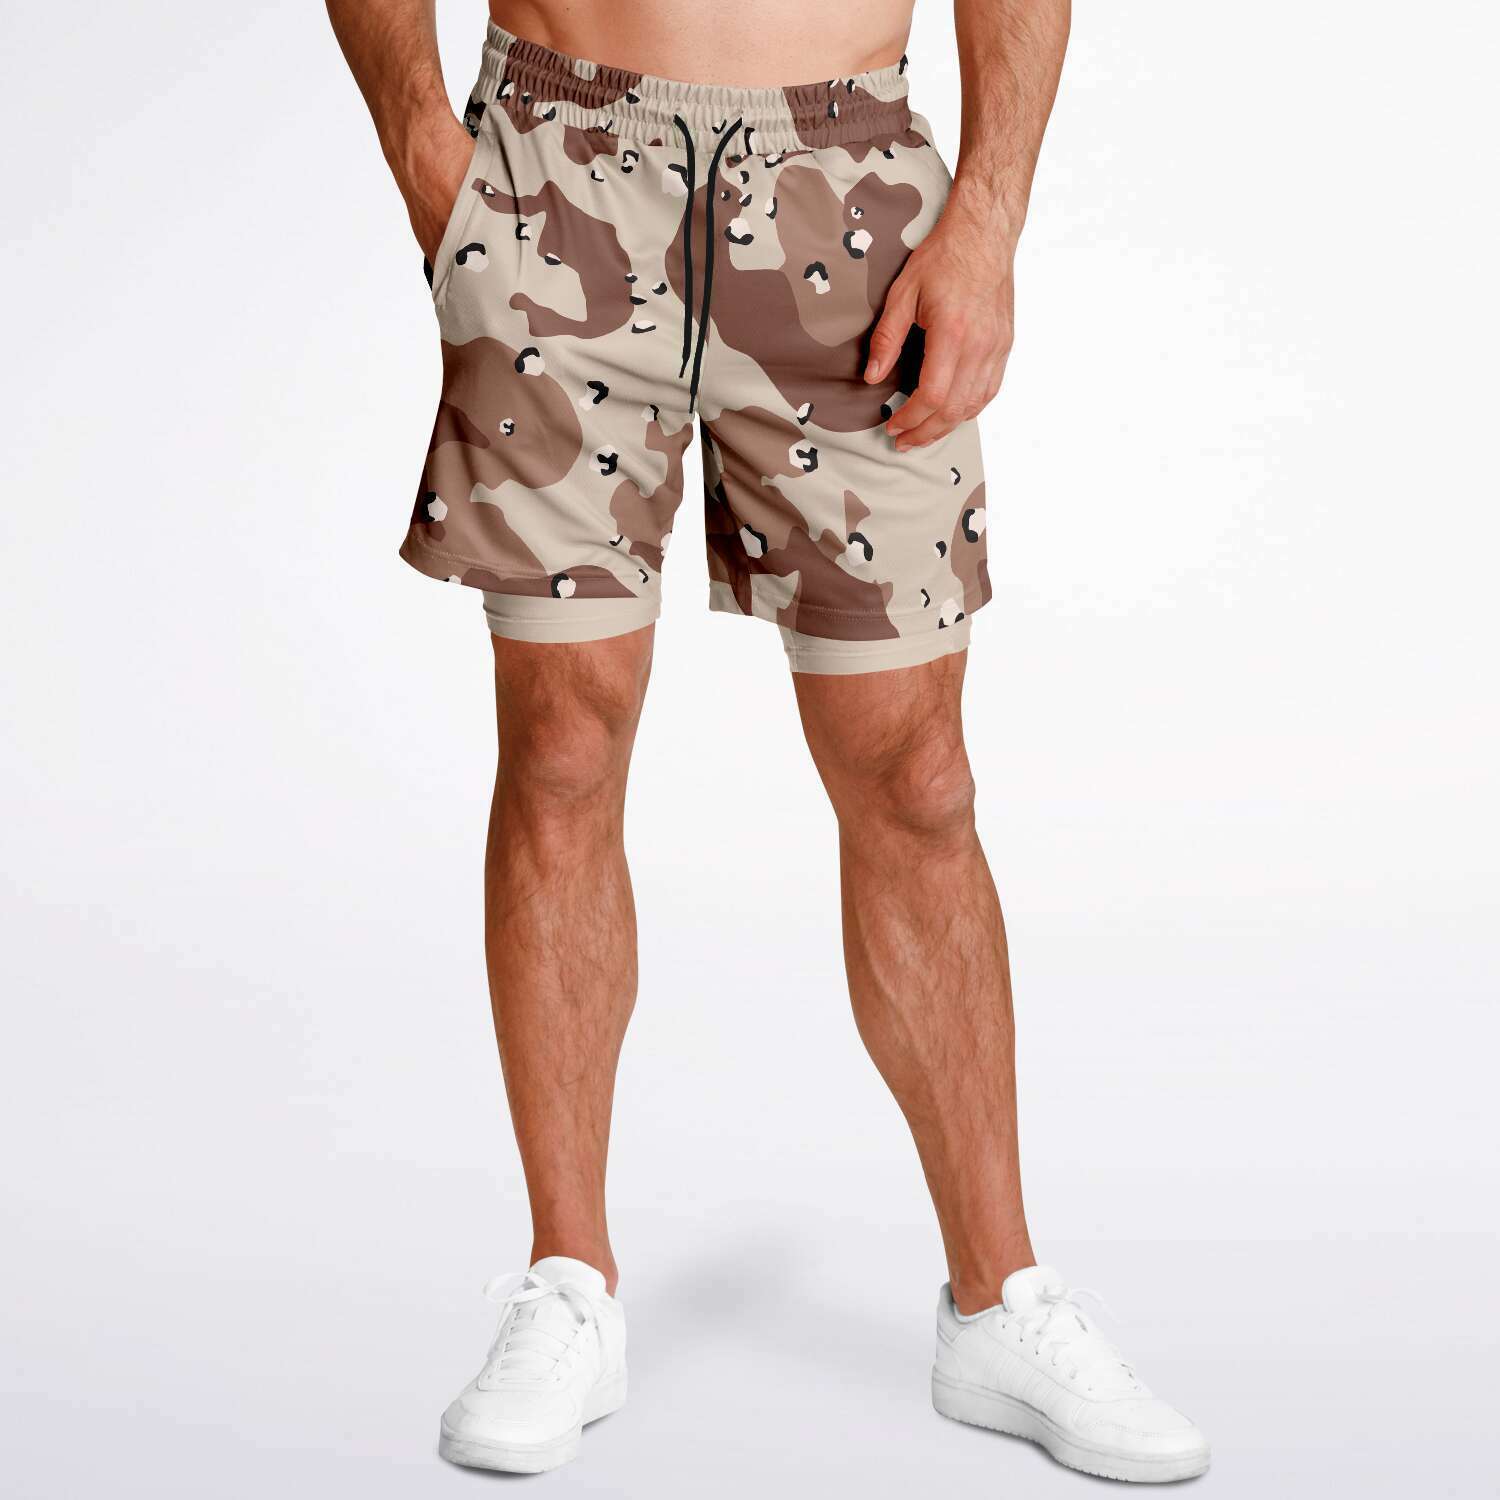 Men's 2-in-1 Desert Sand Chocolate Chip Camouflage Shorts Iron Discipline Supply Co.